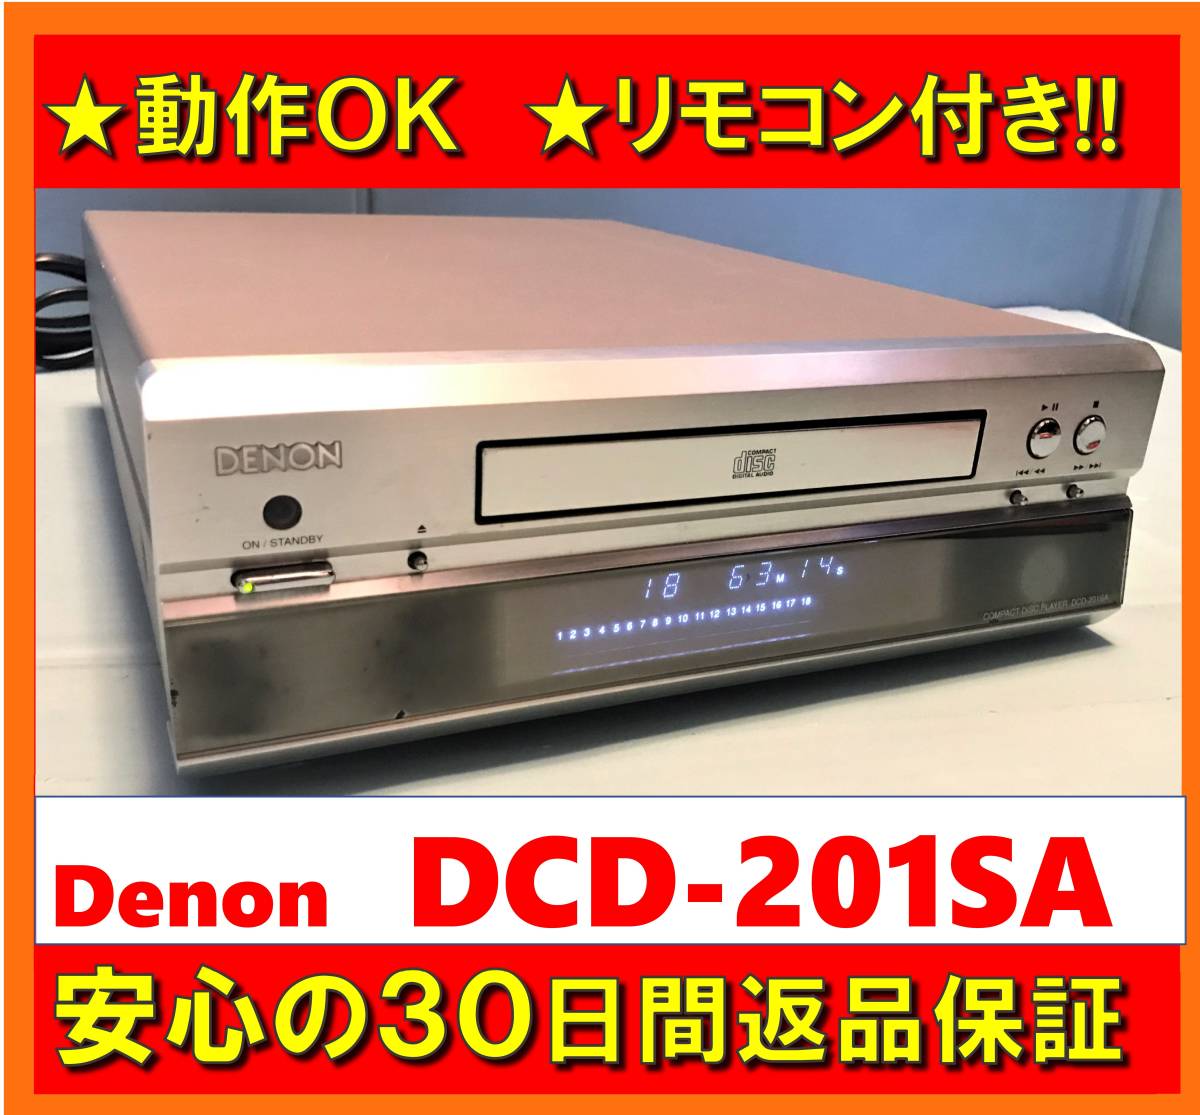 DENON DCD-201SA オークション比較 - 価格.com